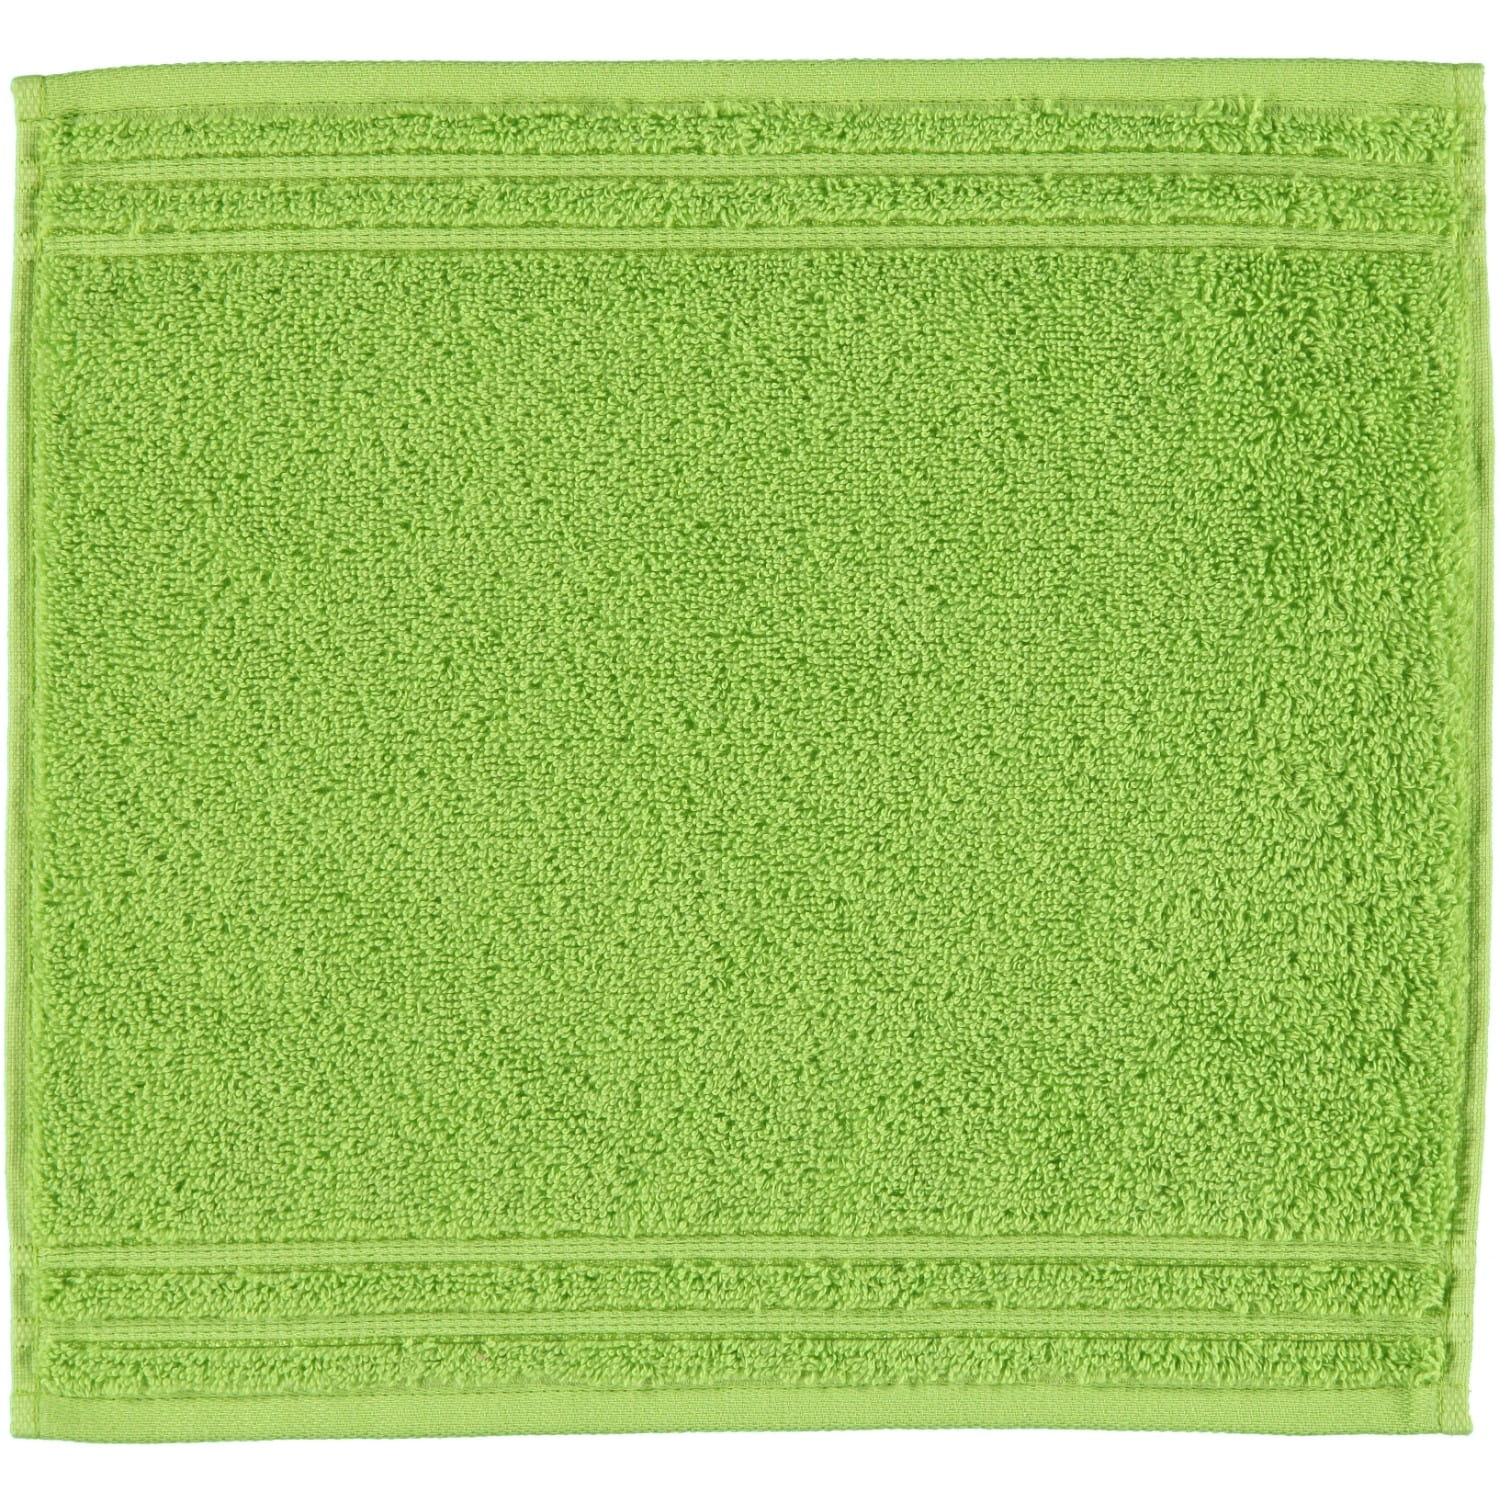 Vossen Handtücher Calypso meadowgreen 530 Handtücher | - | | Vossen Marken Feeling Vossen Farbe: 